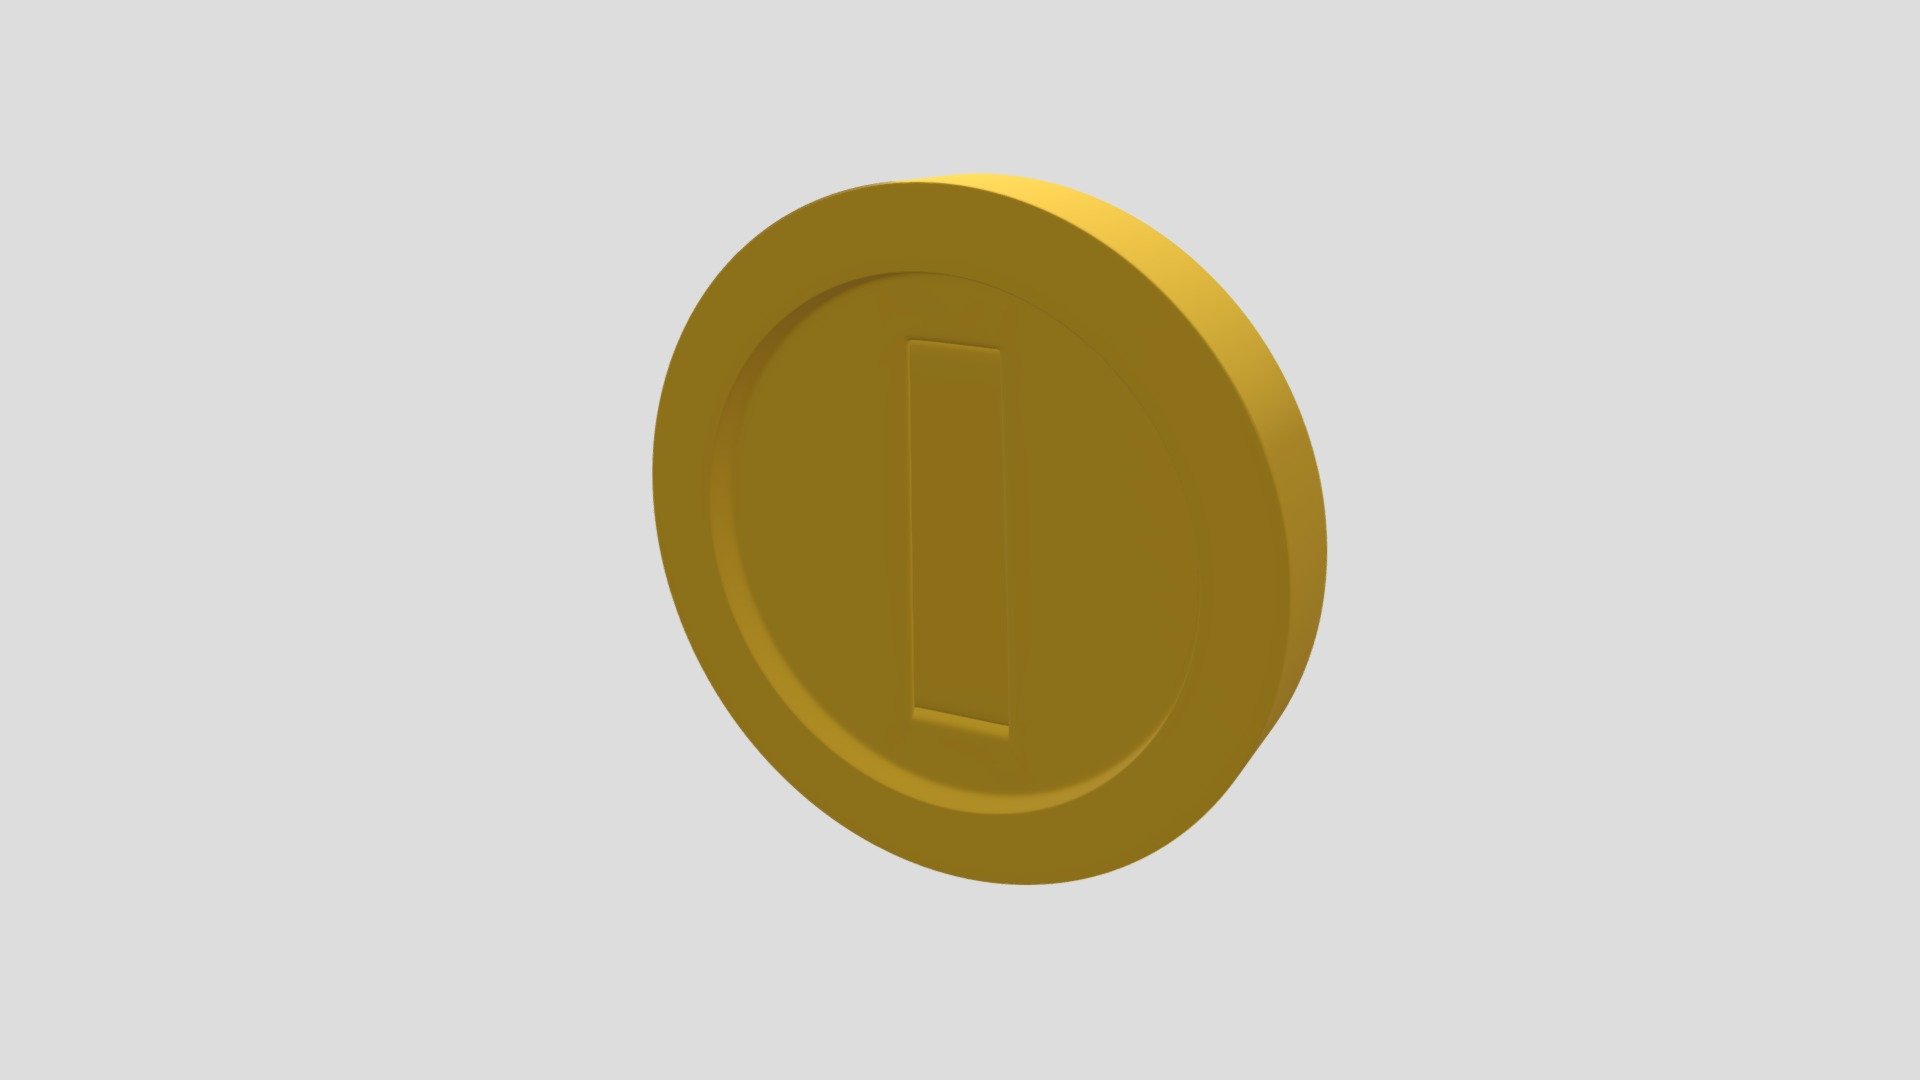 Super Mario Bros Gold Coin made in blender - Super Mario Bros Gold Coin - 3D model by grkpektis 3d model